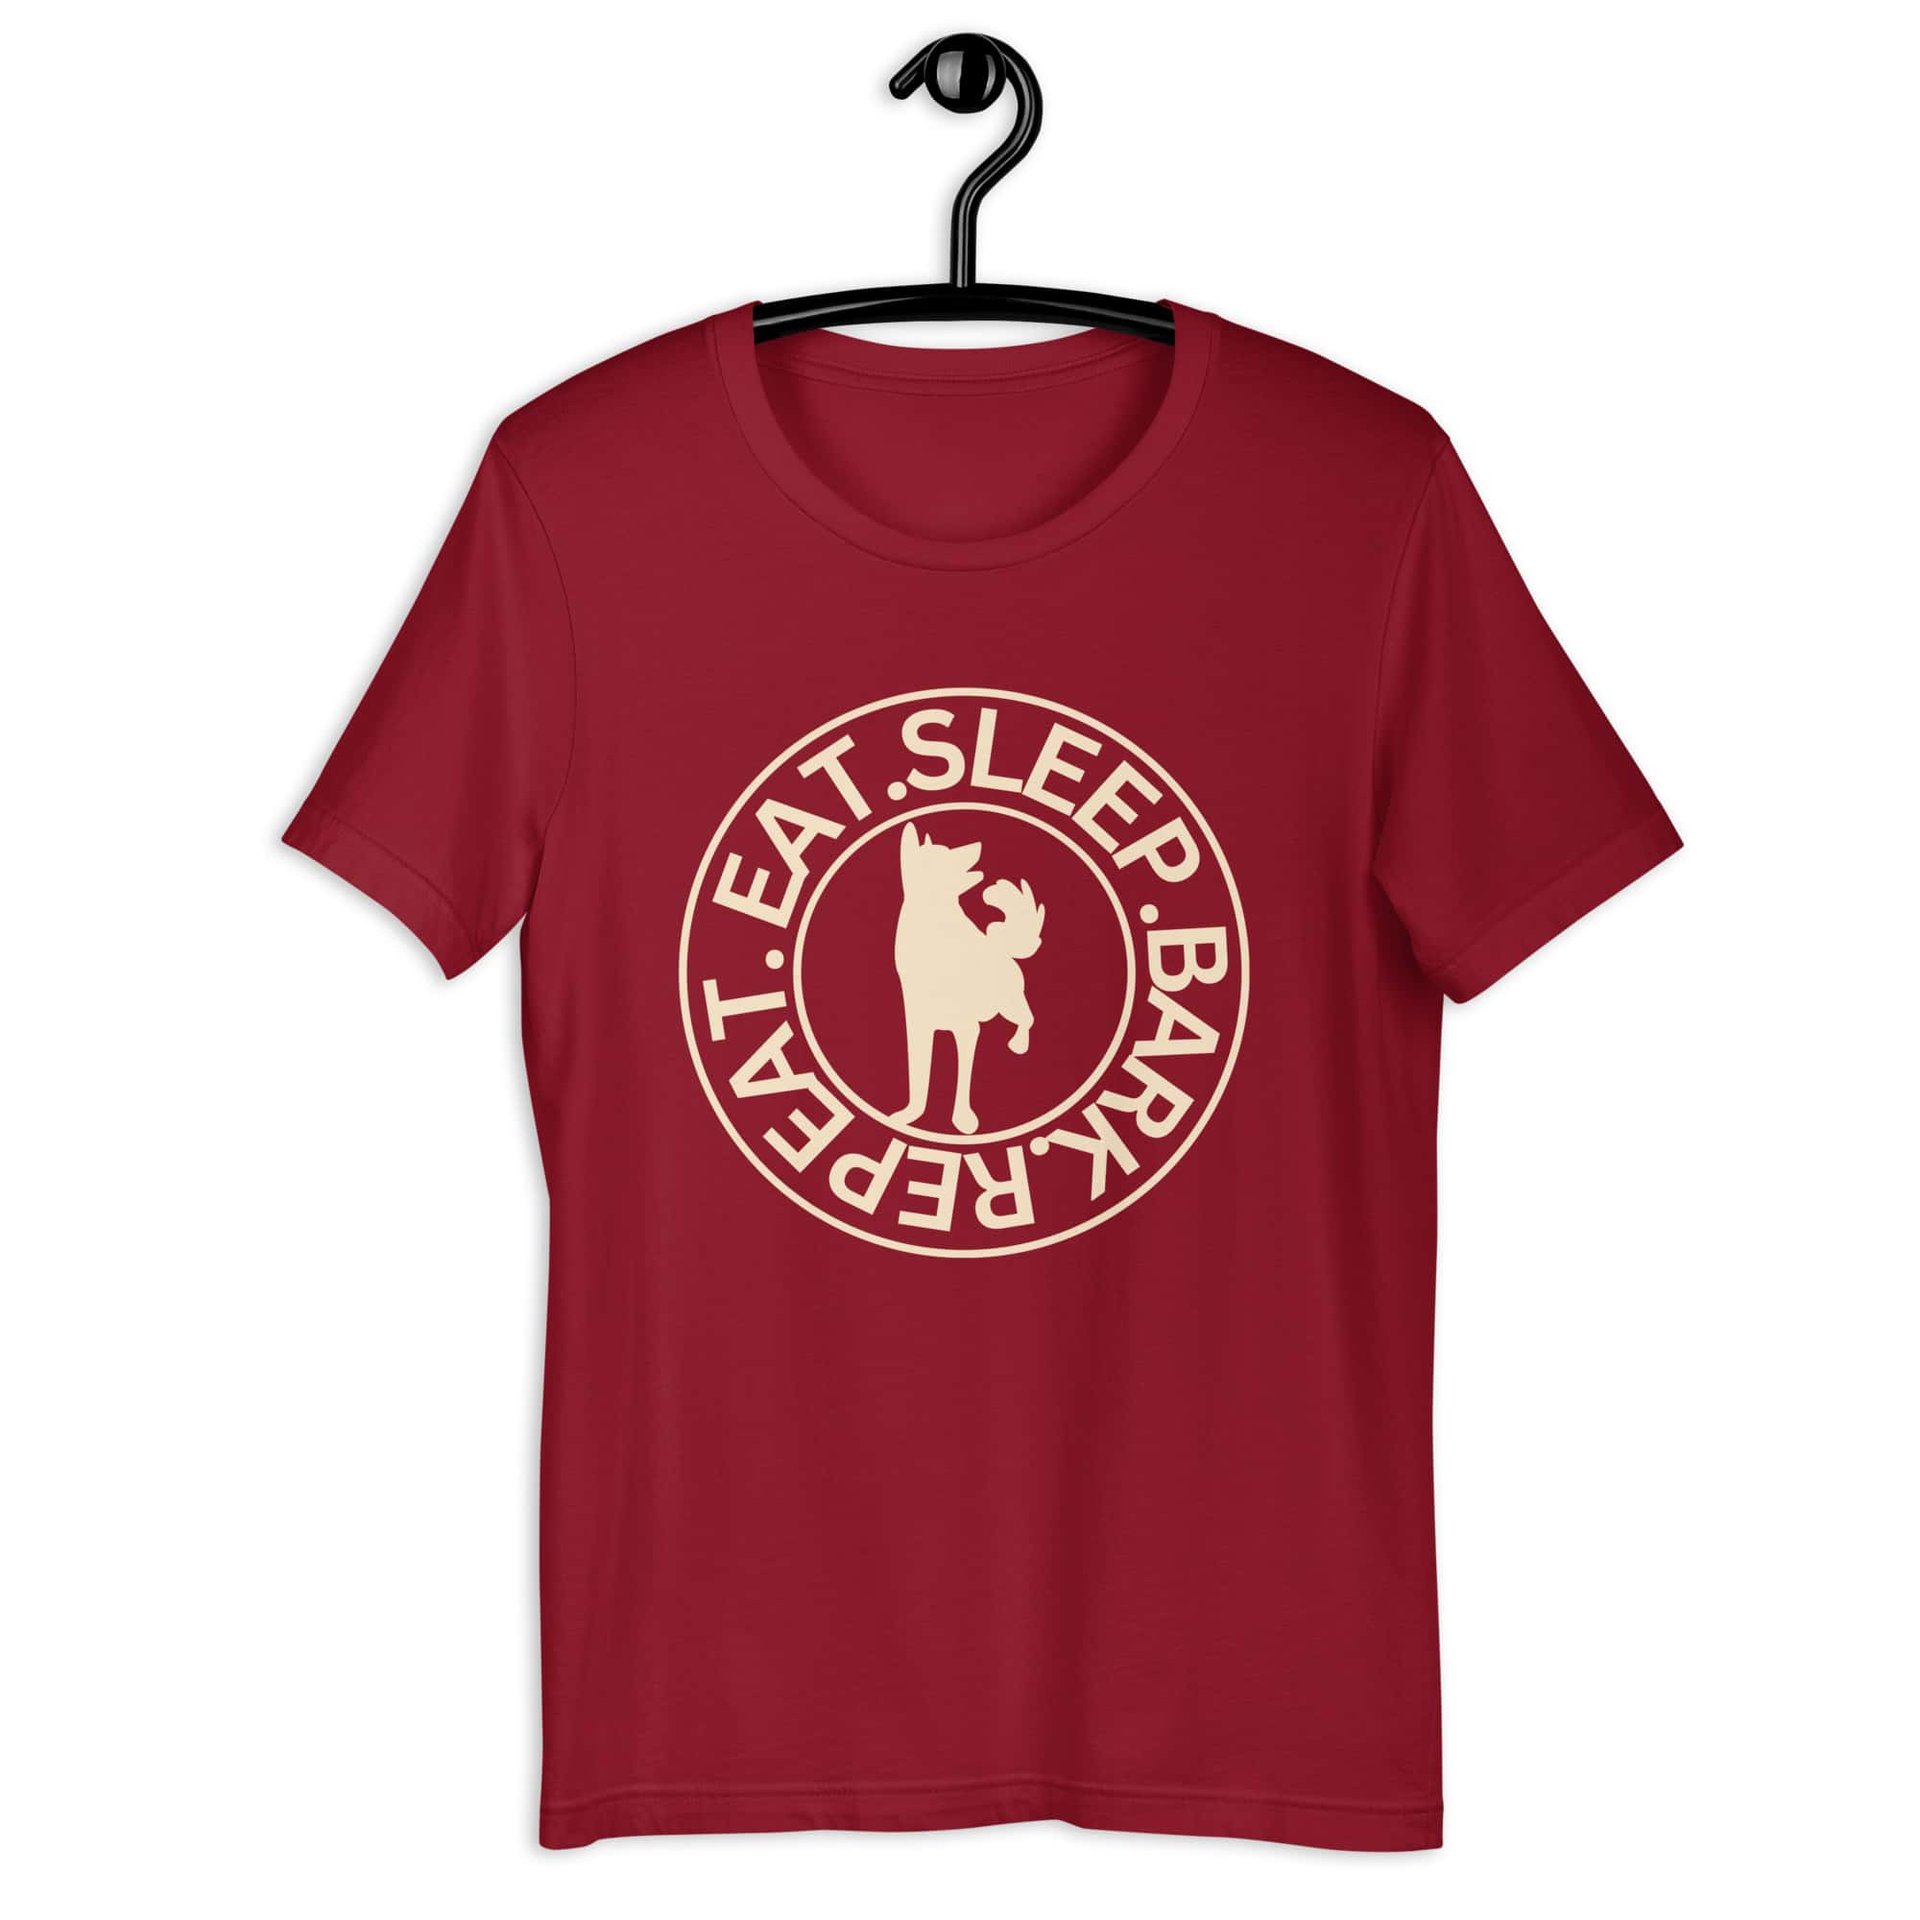 Eat Sleep Bark Repeat Shepherd Unisex T-Shirt. Cardinal